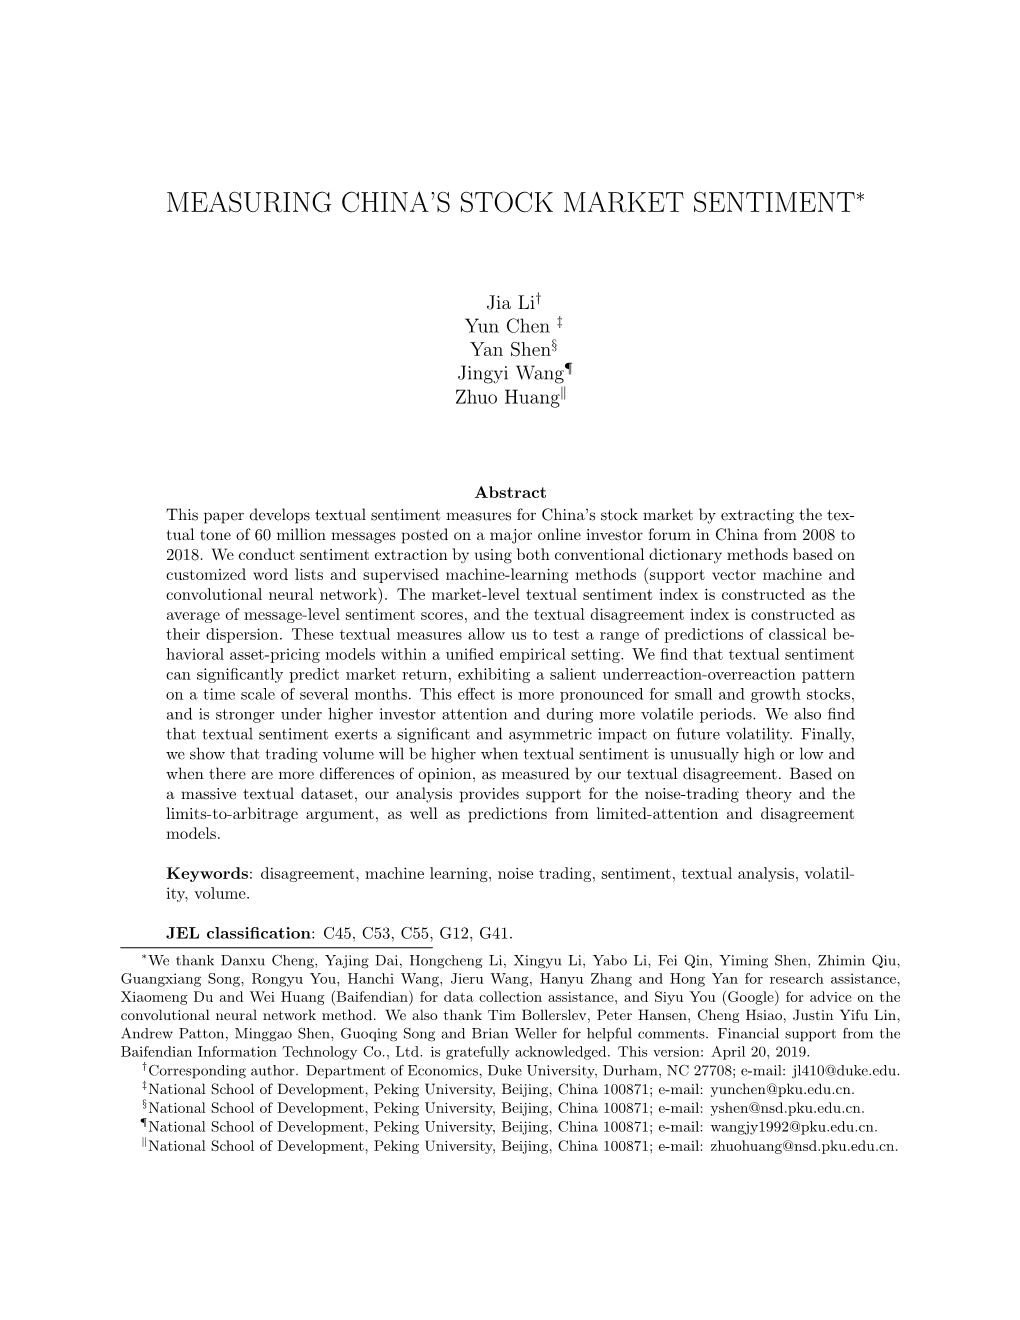 Measuring China's Stock Market Sentiment